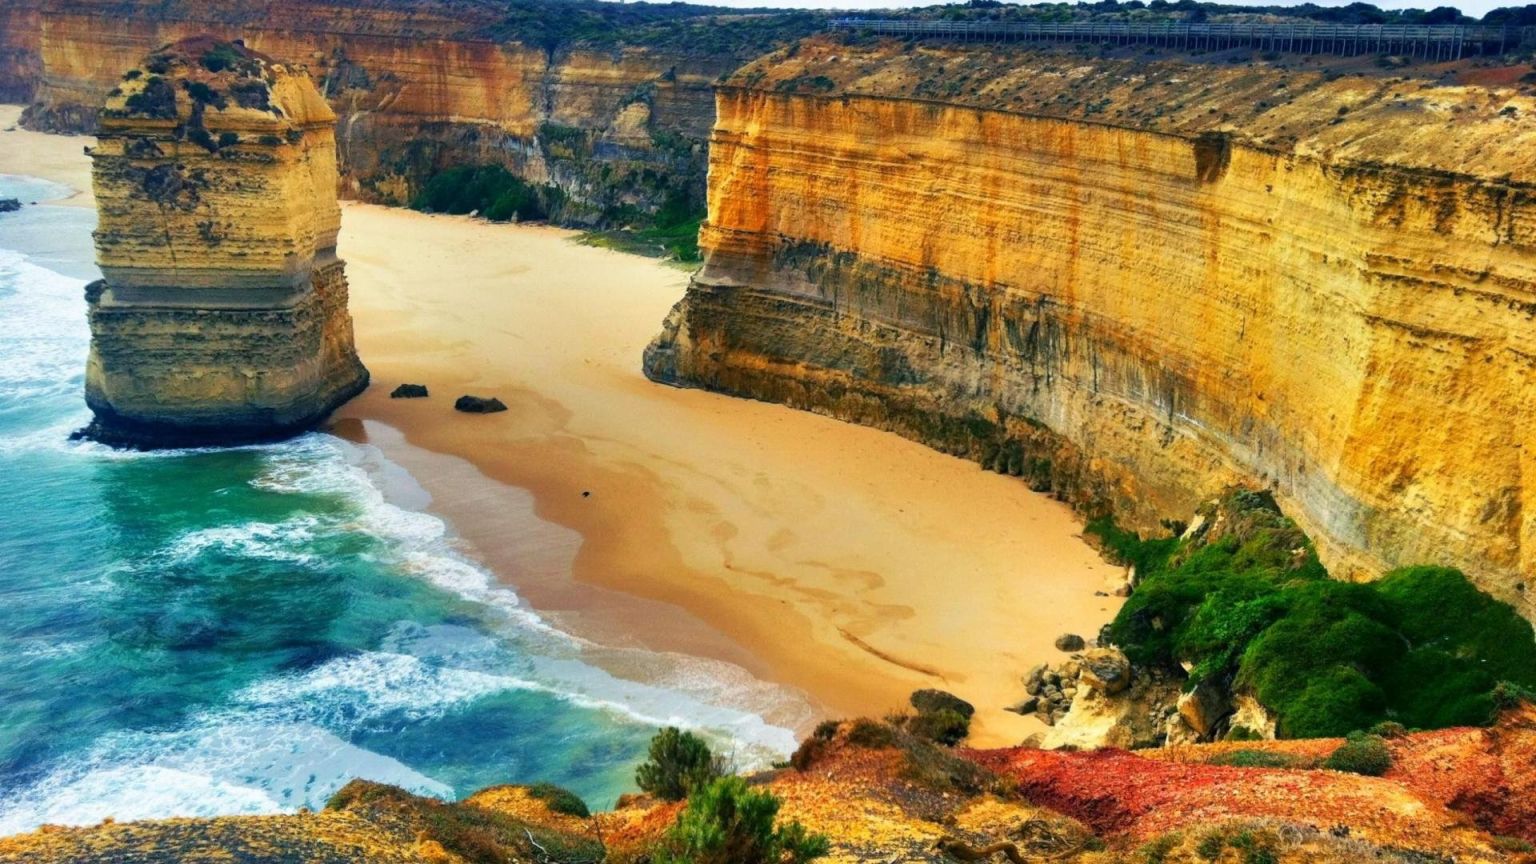 Australia Beach wallpaper in 1536x864 resolution